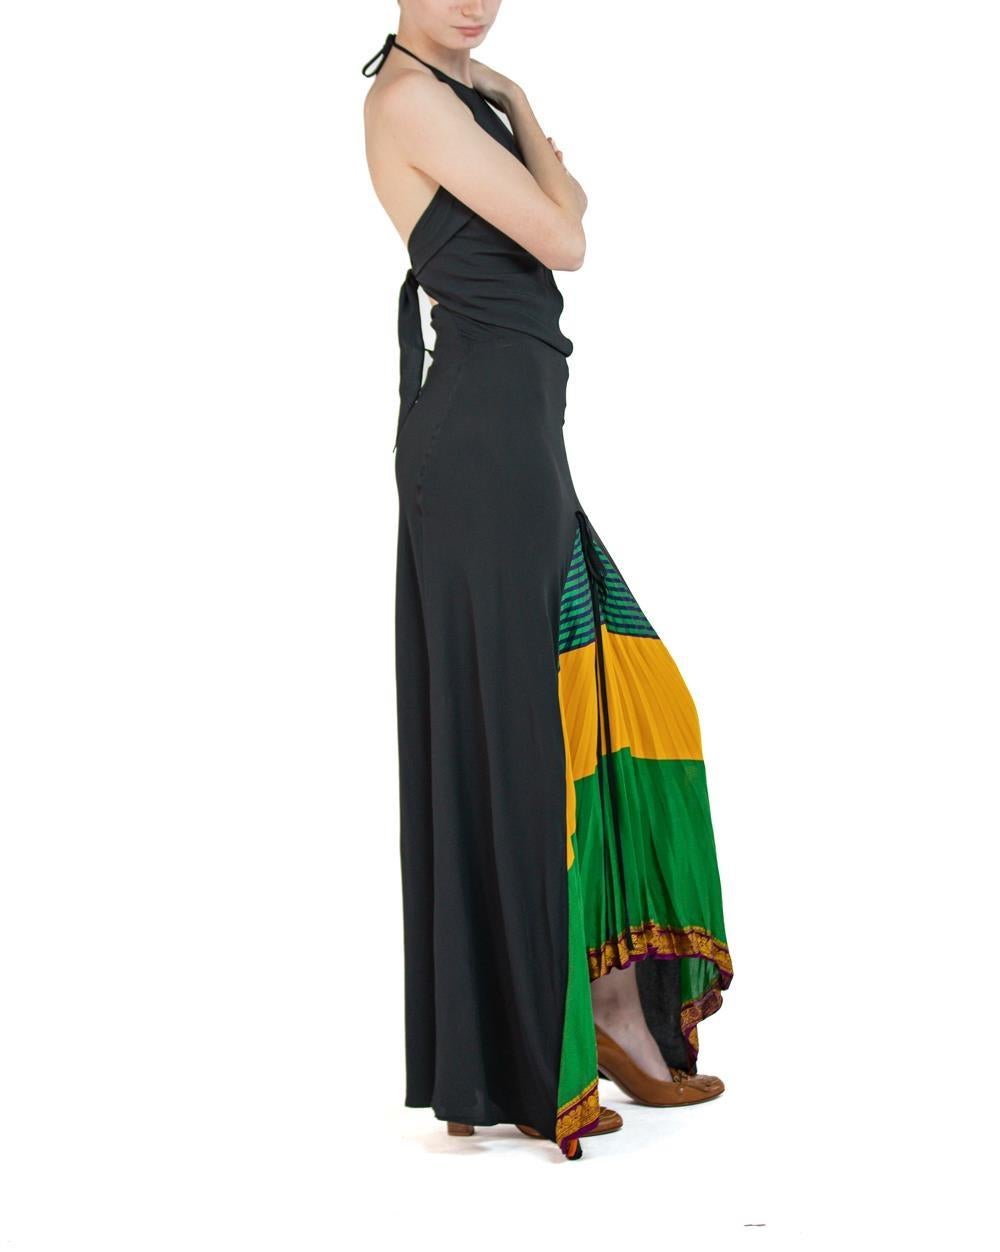 1990S FEMME BY JEAN PAUL GAULTIER Black, Yellow & Green Rayon Long Dress For Sale 1